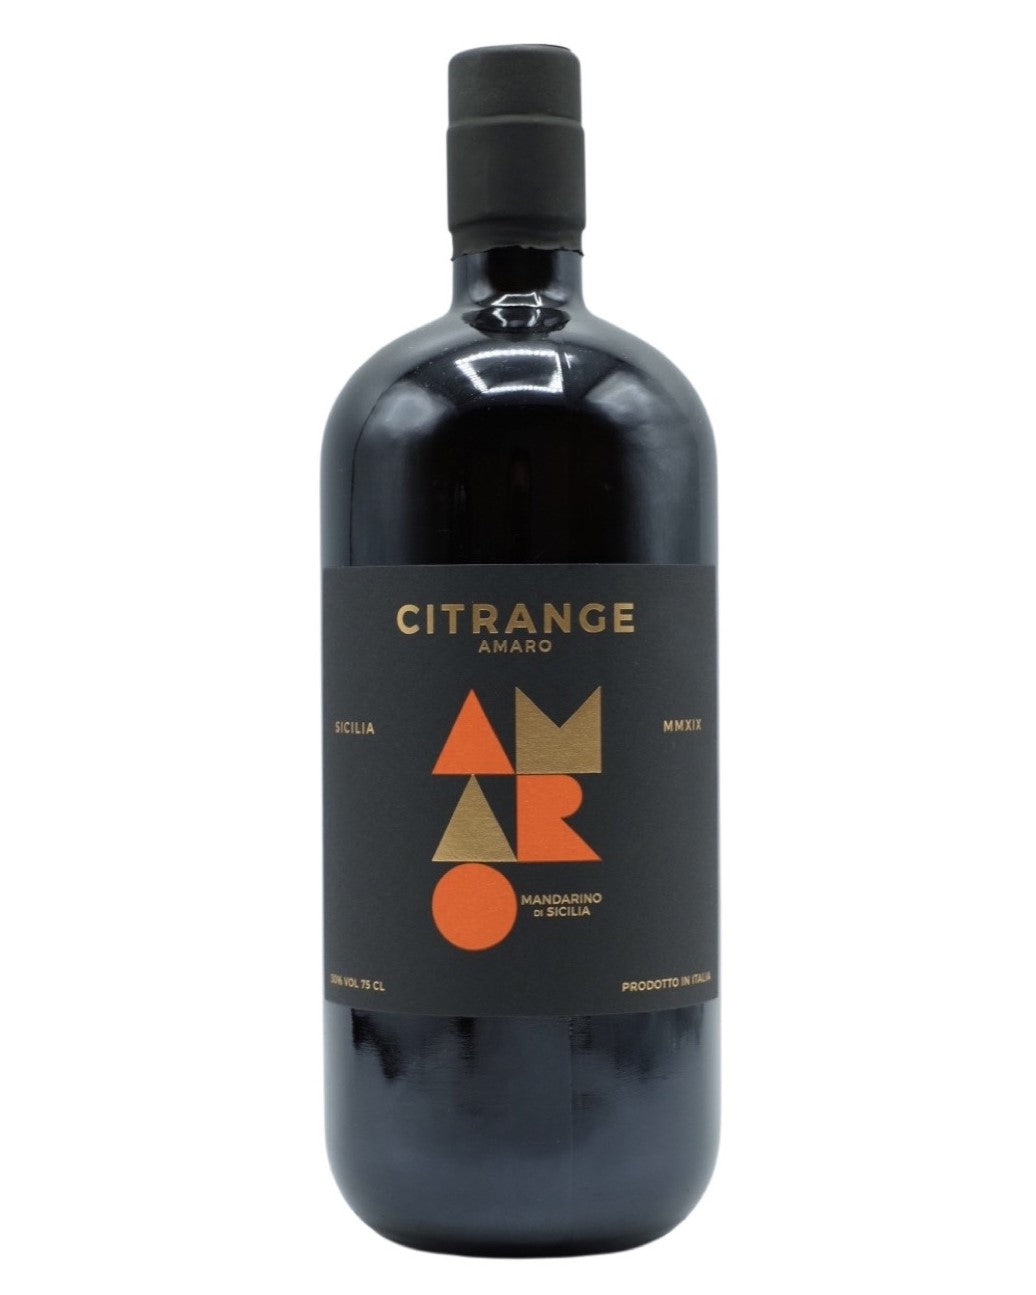 Citrange Amaro Orange